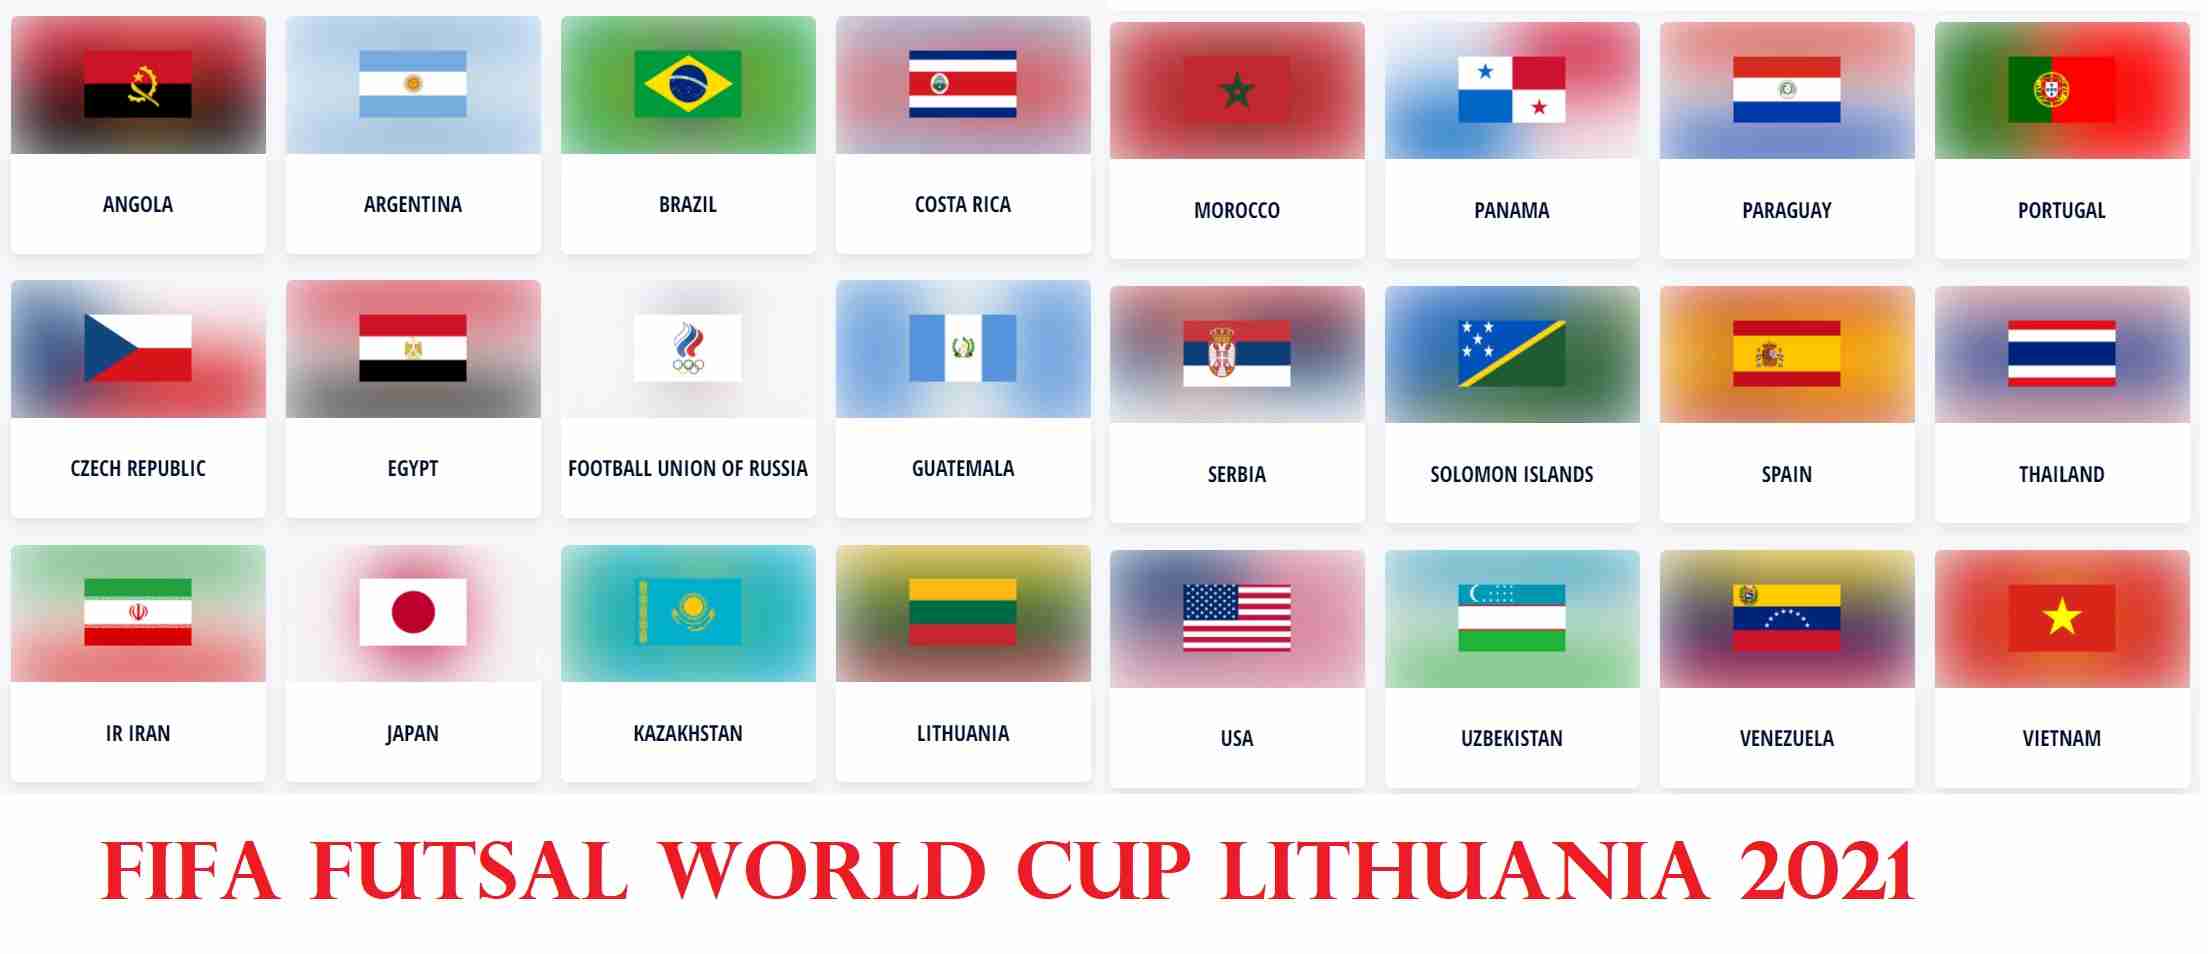 FIFA FUTSAL WORLD CUP LITHUANIA 2021